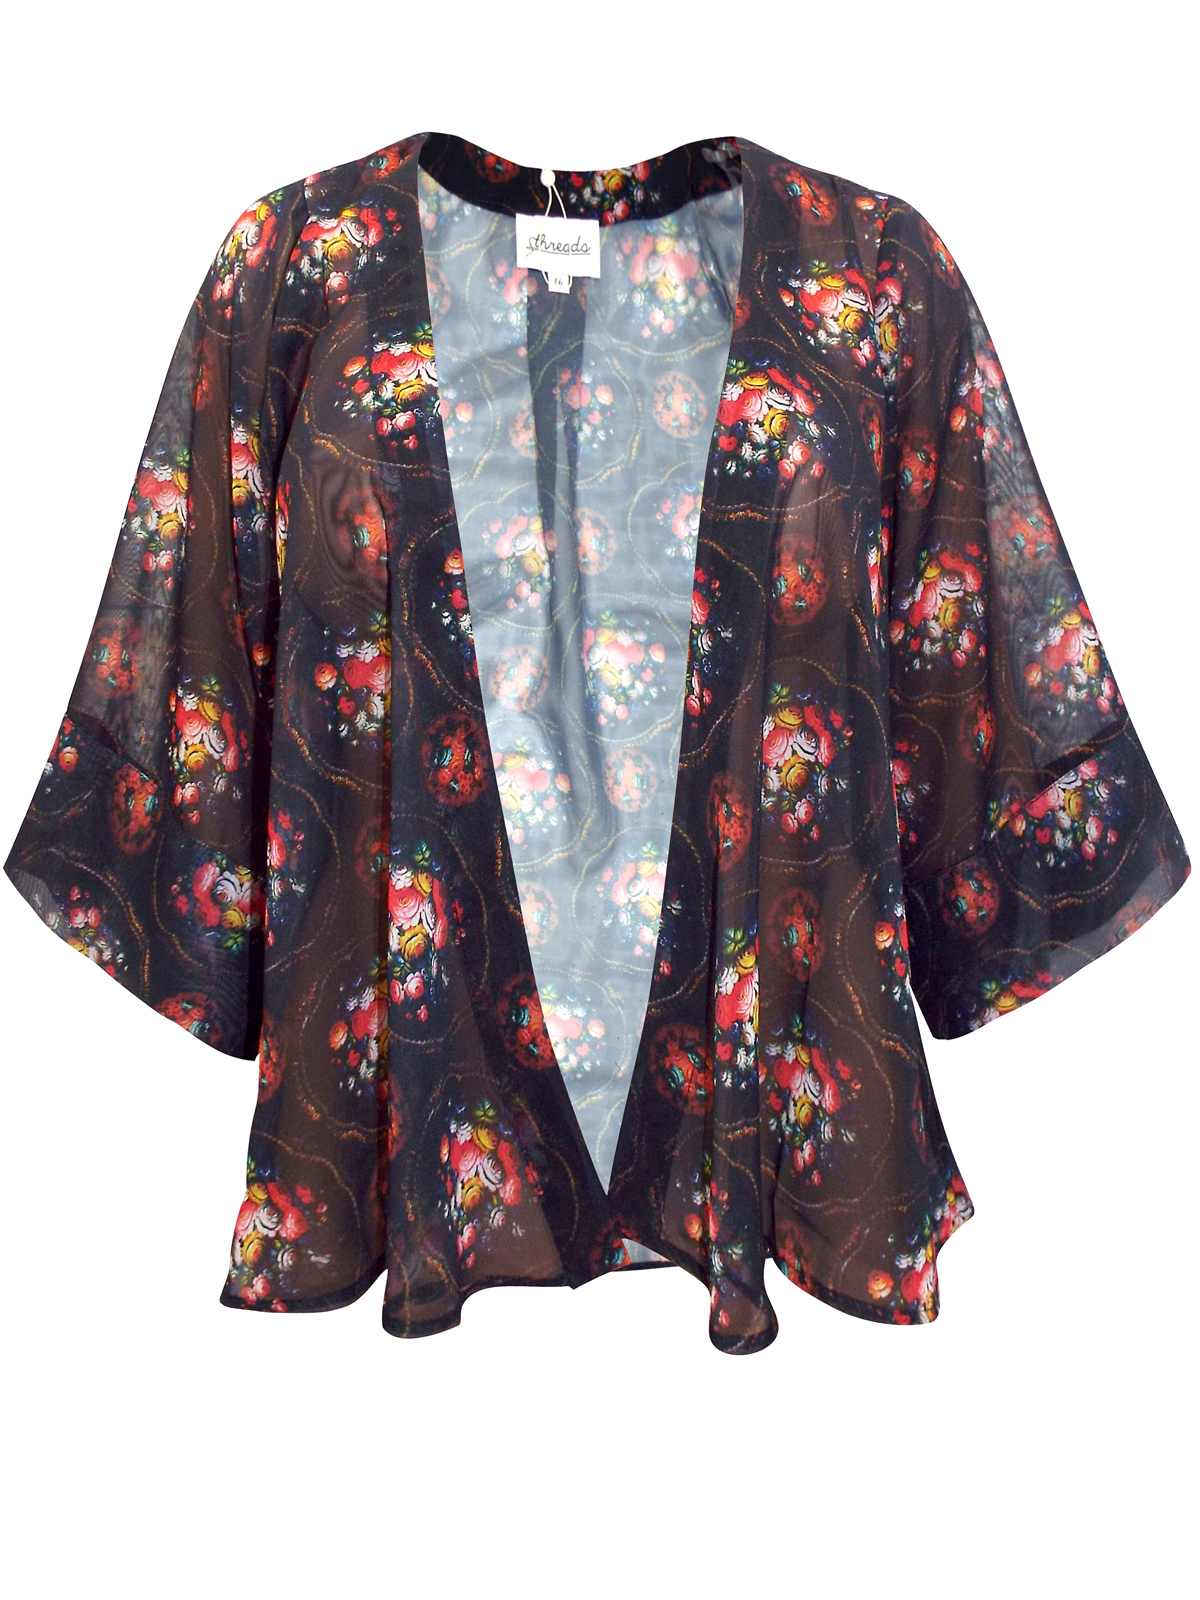 Threads - - Threads BLACK Floral Print Kimono Cover-Up - Plus Size 16 to 26